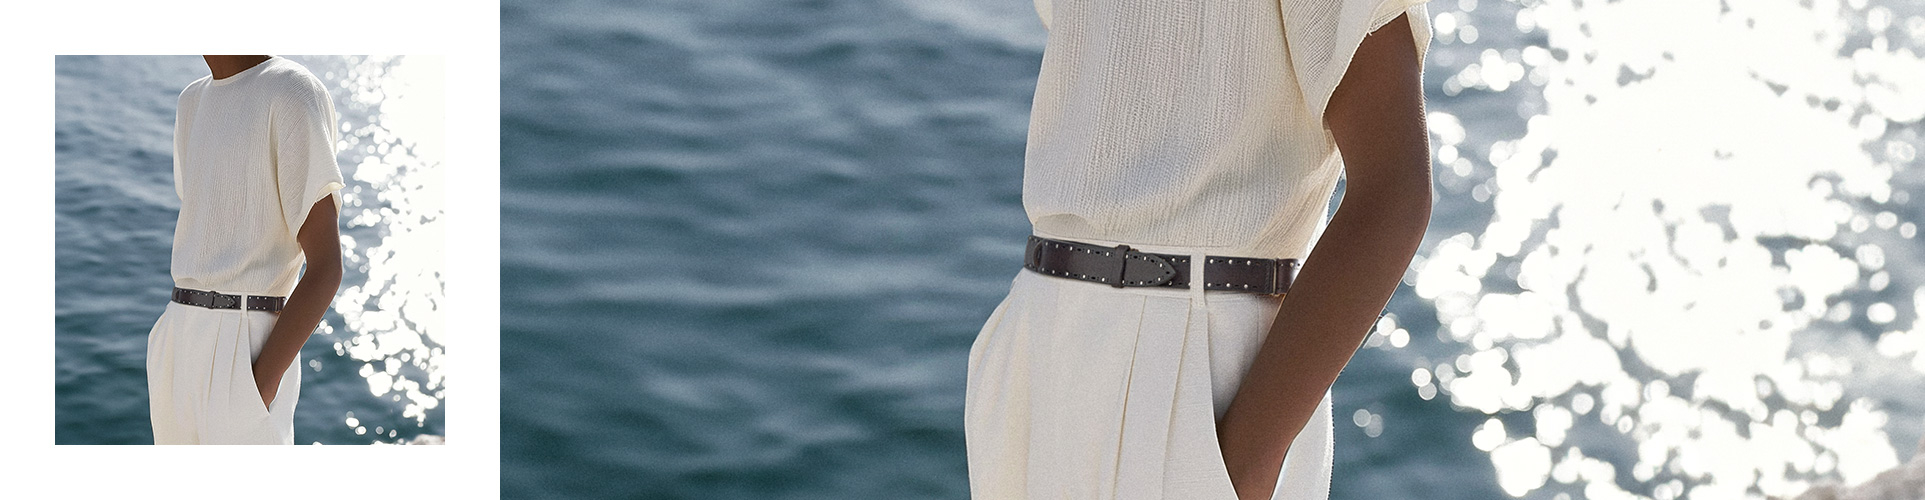 ORCIANI | NOBUCKLE Belts collection. Leather Belts | Shop online